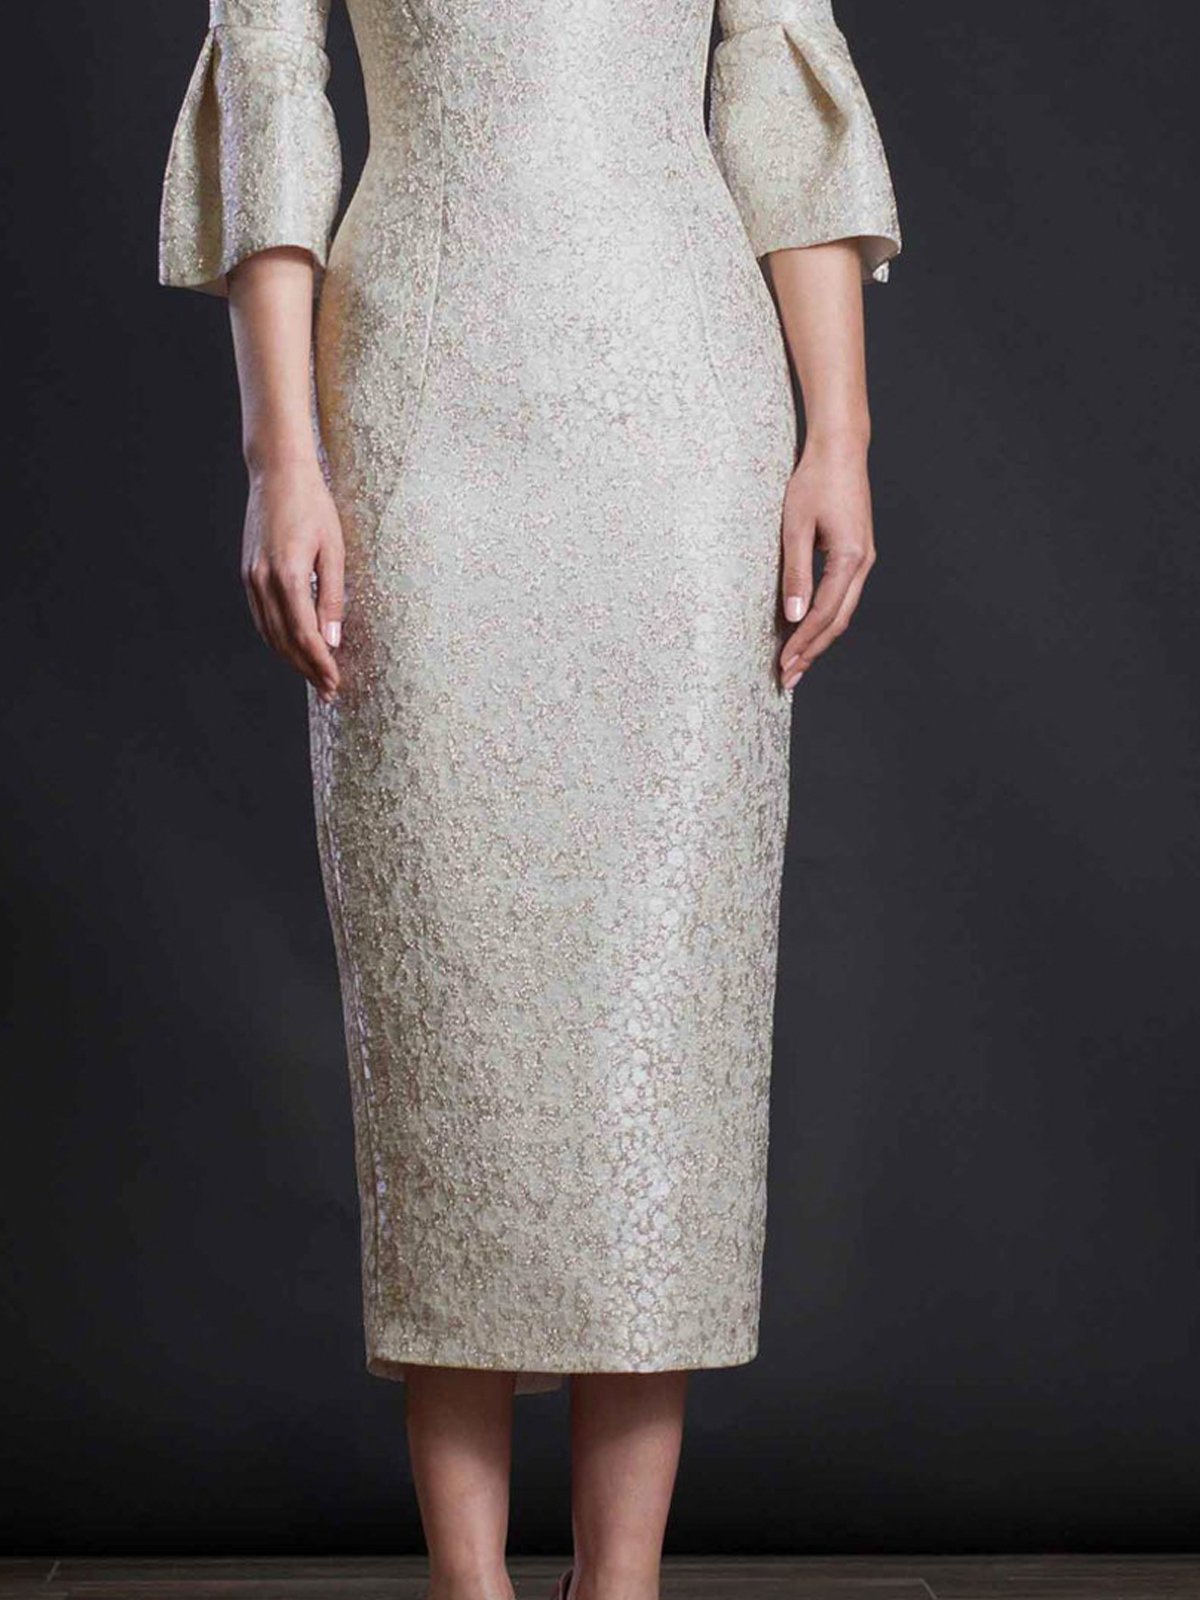 Plain Regular Fit Elegant Midi Dress